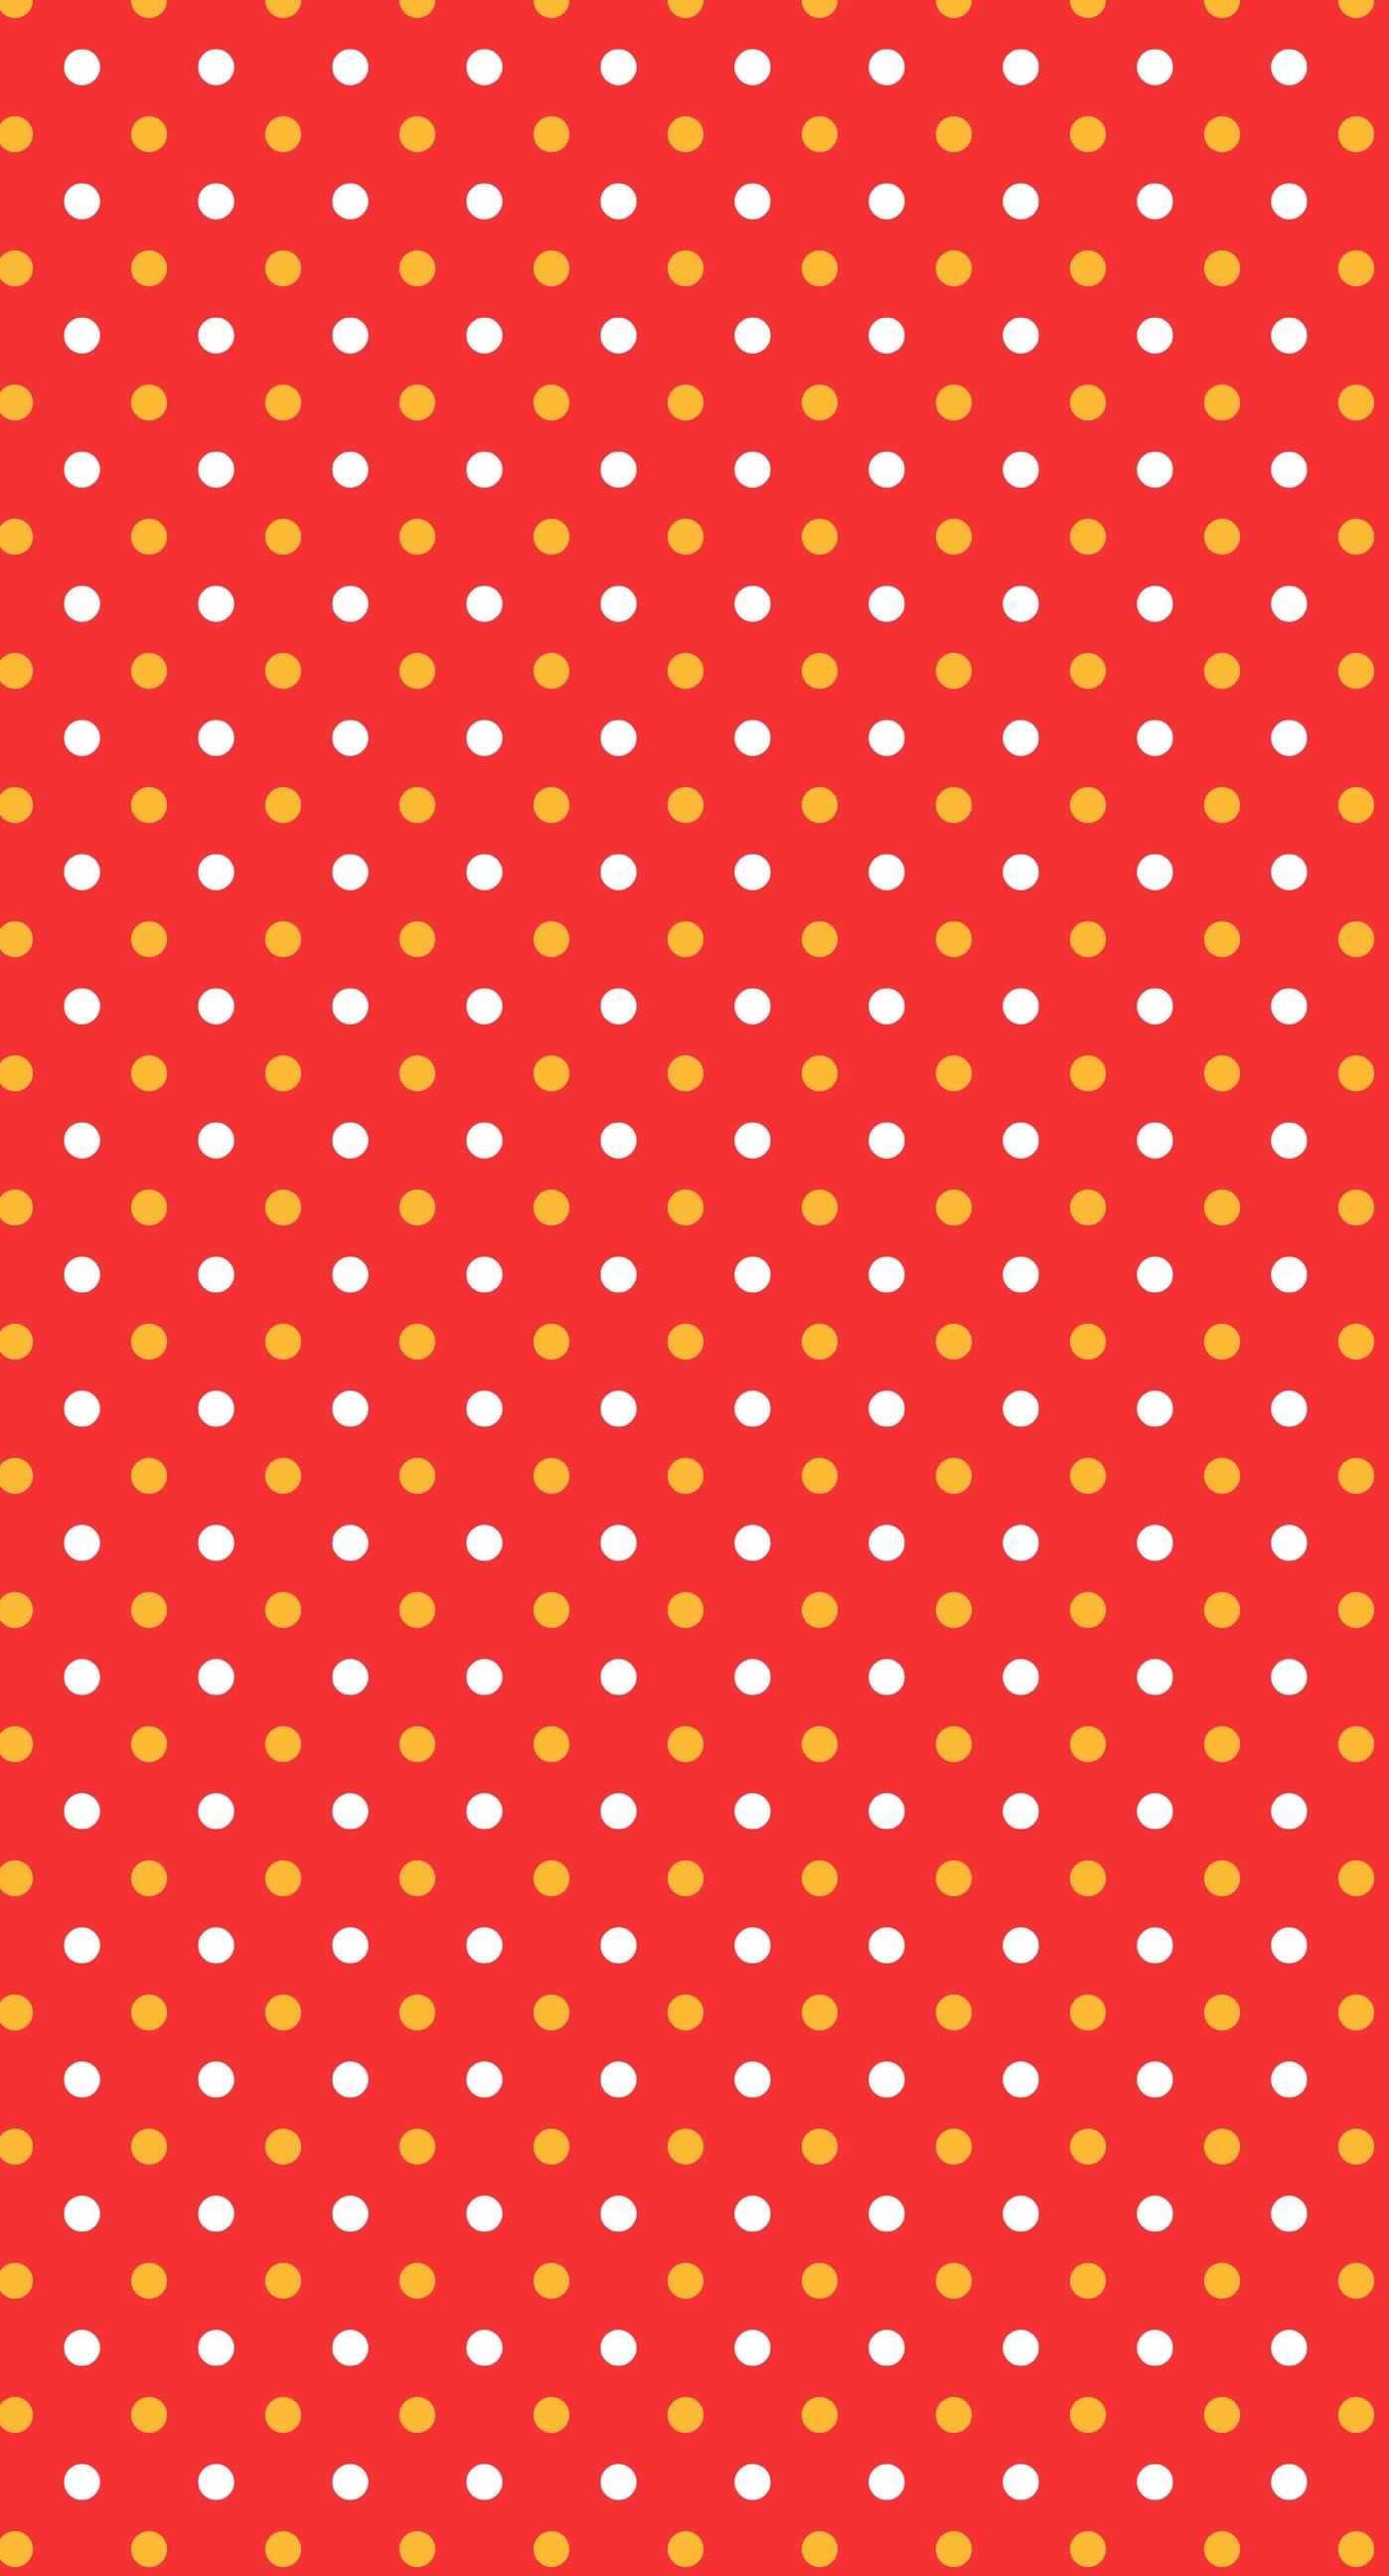 Pattern polka dot red women friendly iPhone7 Plus Wallpaper